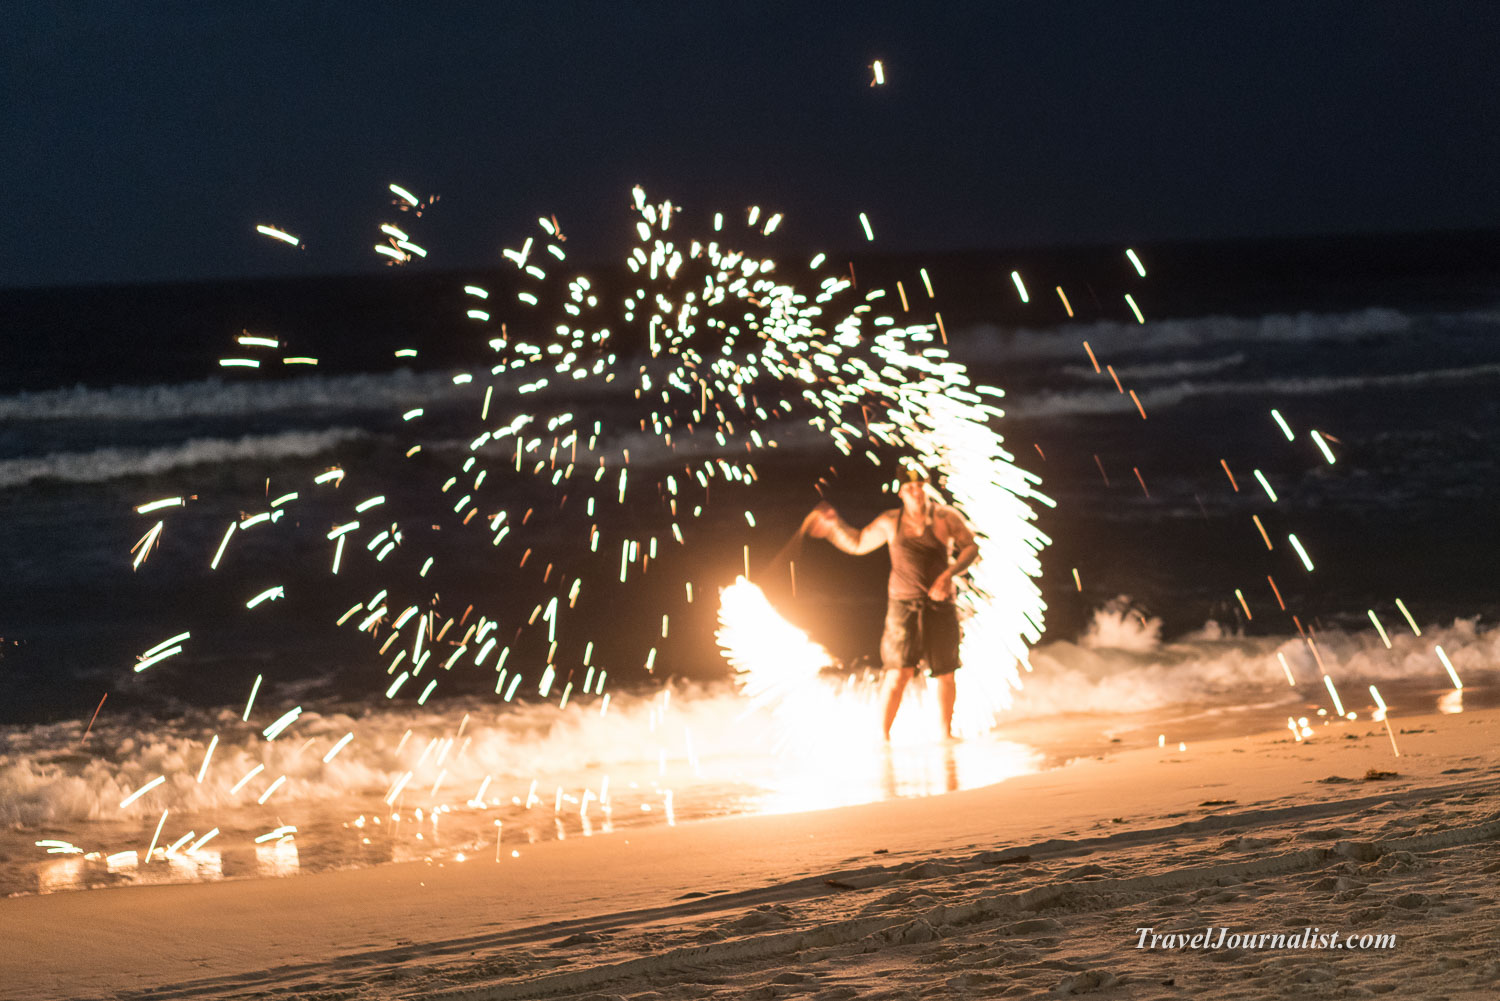 Fire-torch-artist-Juggler-Thailand-Beach-Grand-Centara-Koh-Samui-8b